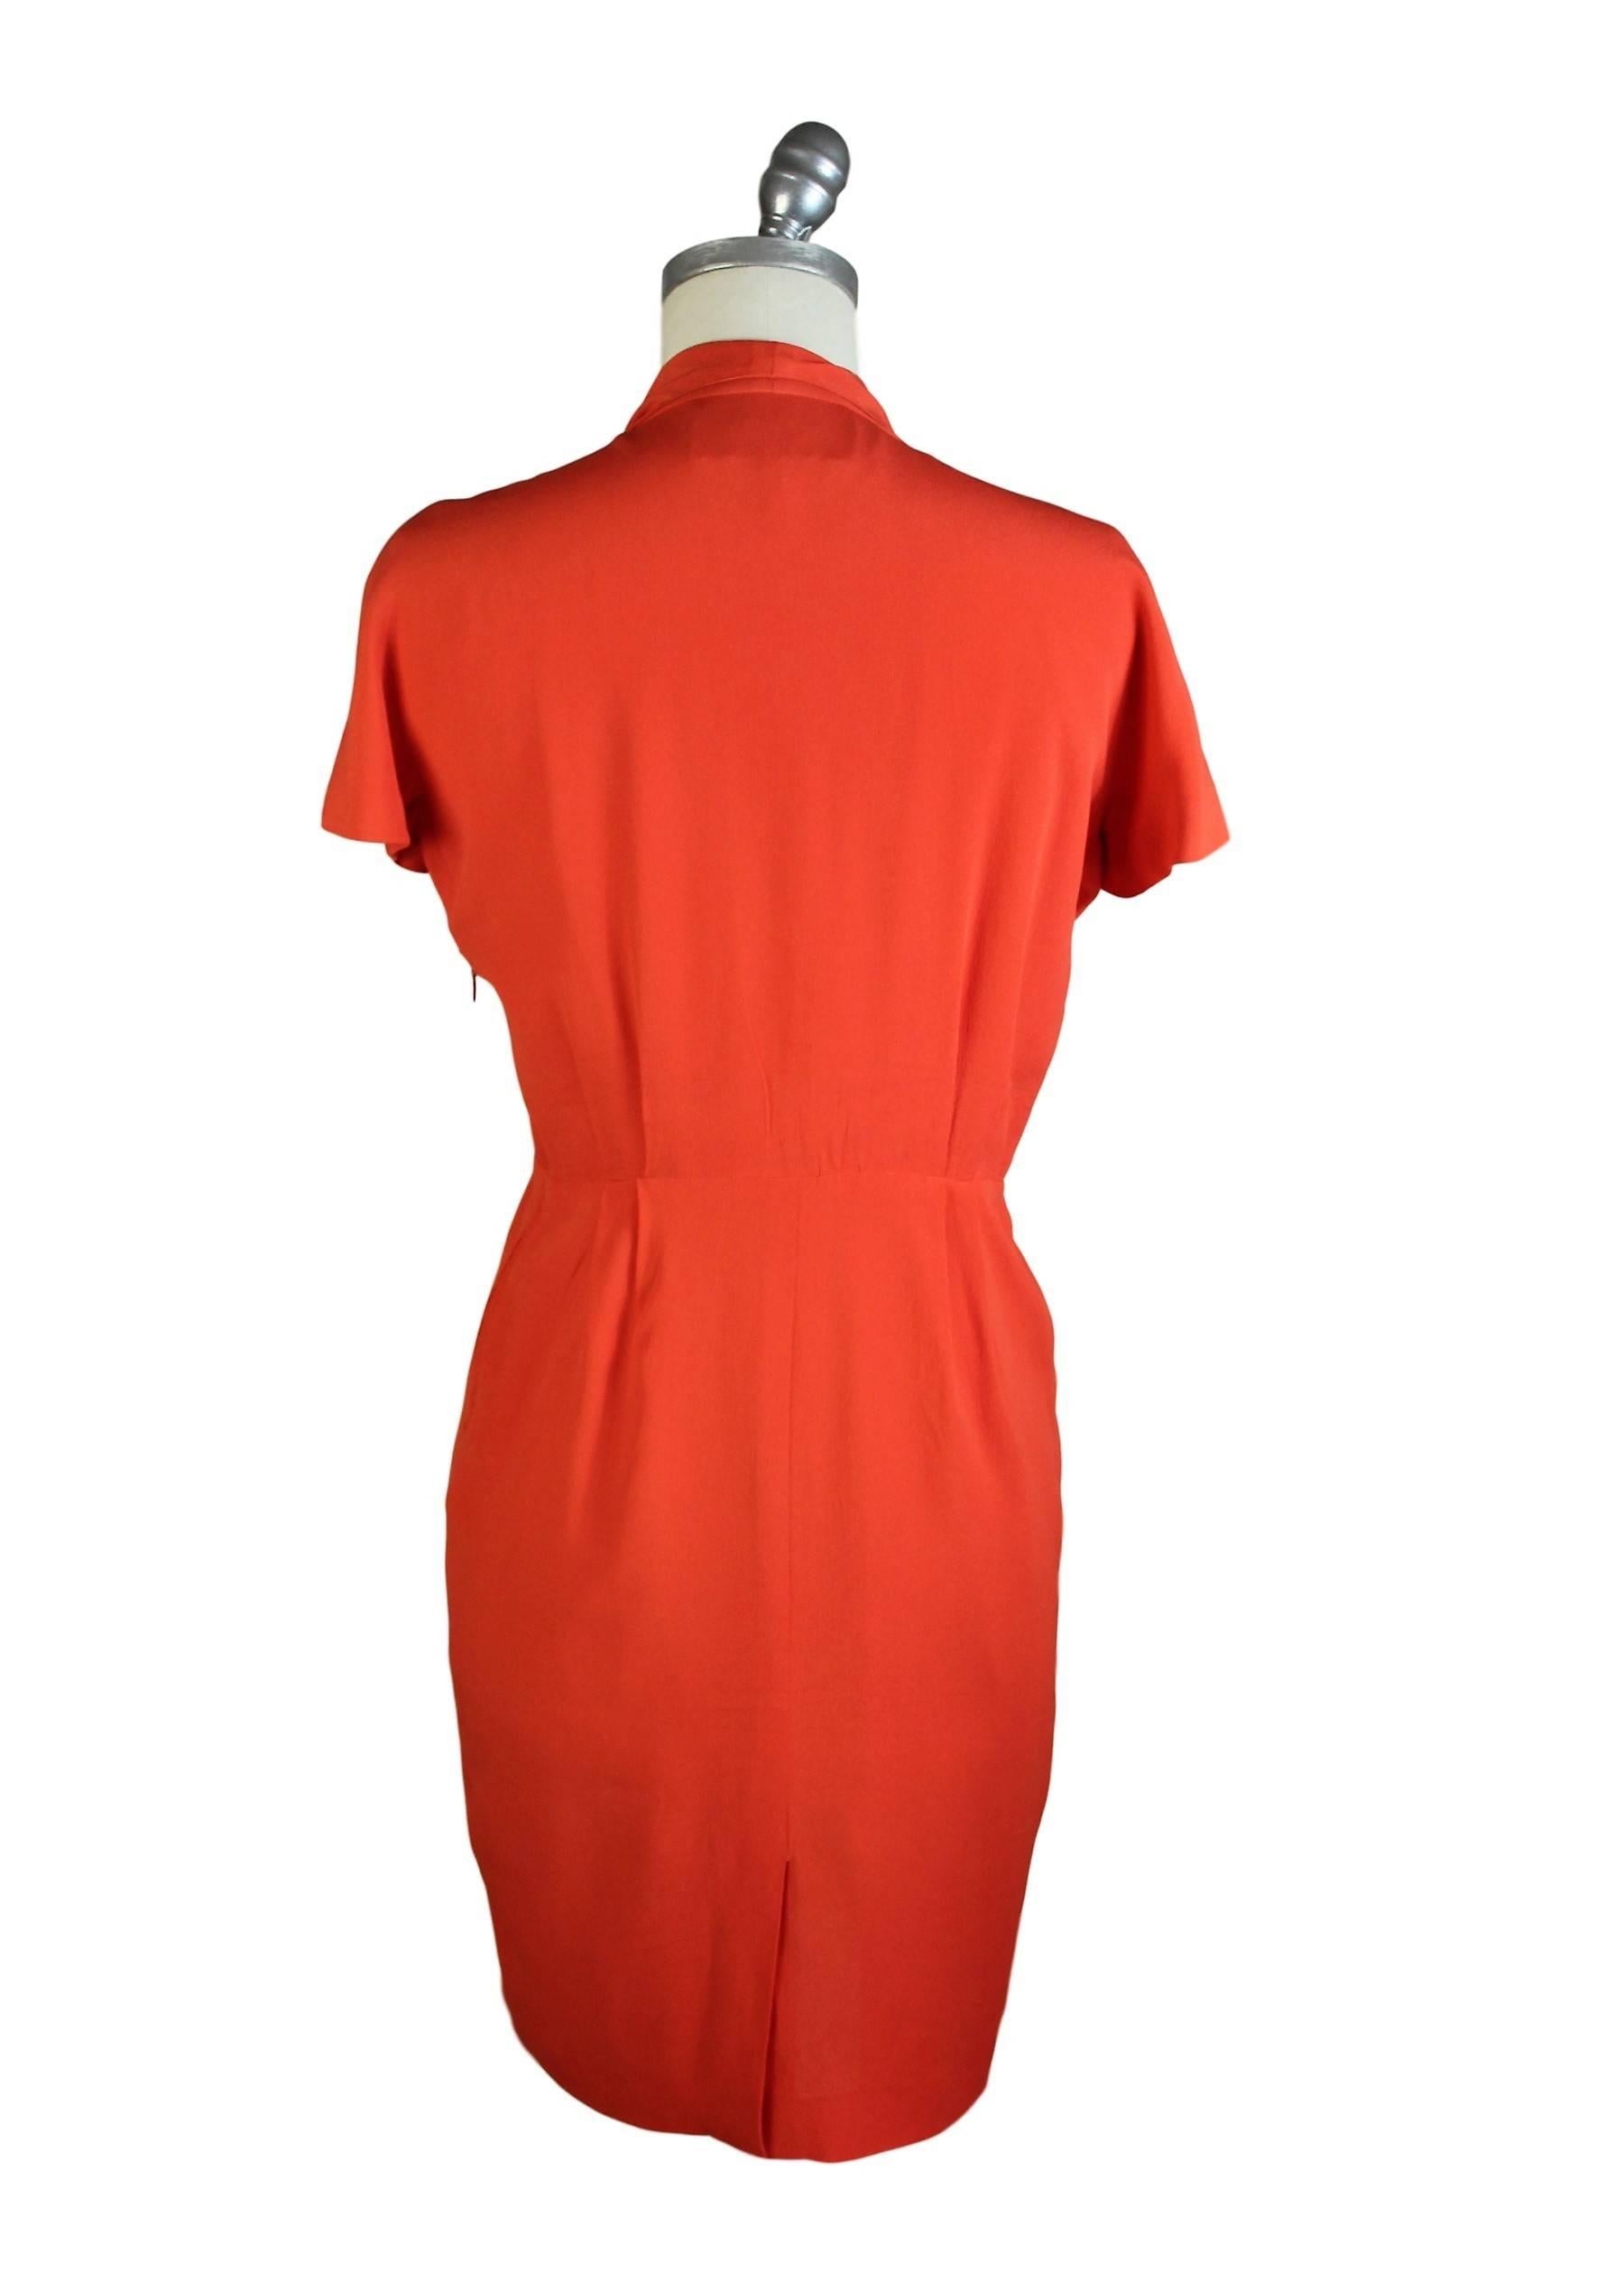 Red 1980s Fendi Peach Silk Blend Sheath Dress Evening Gown